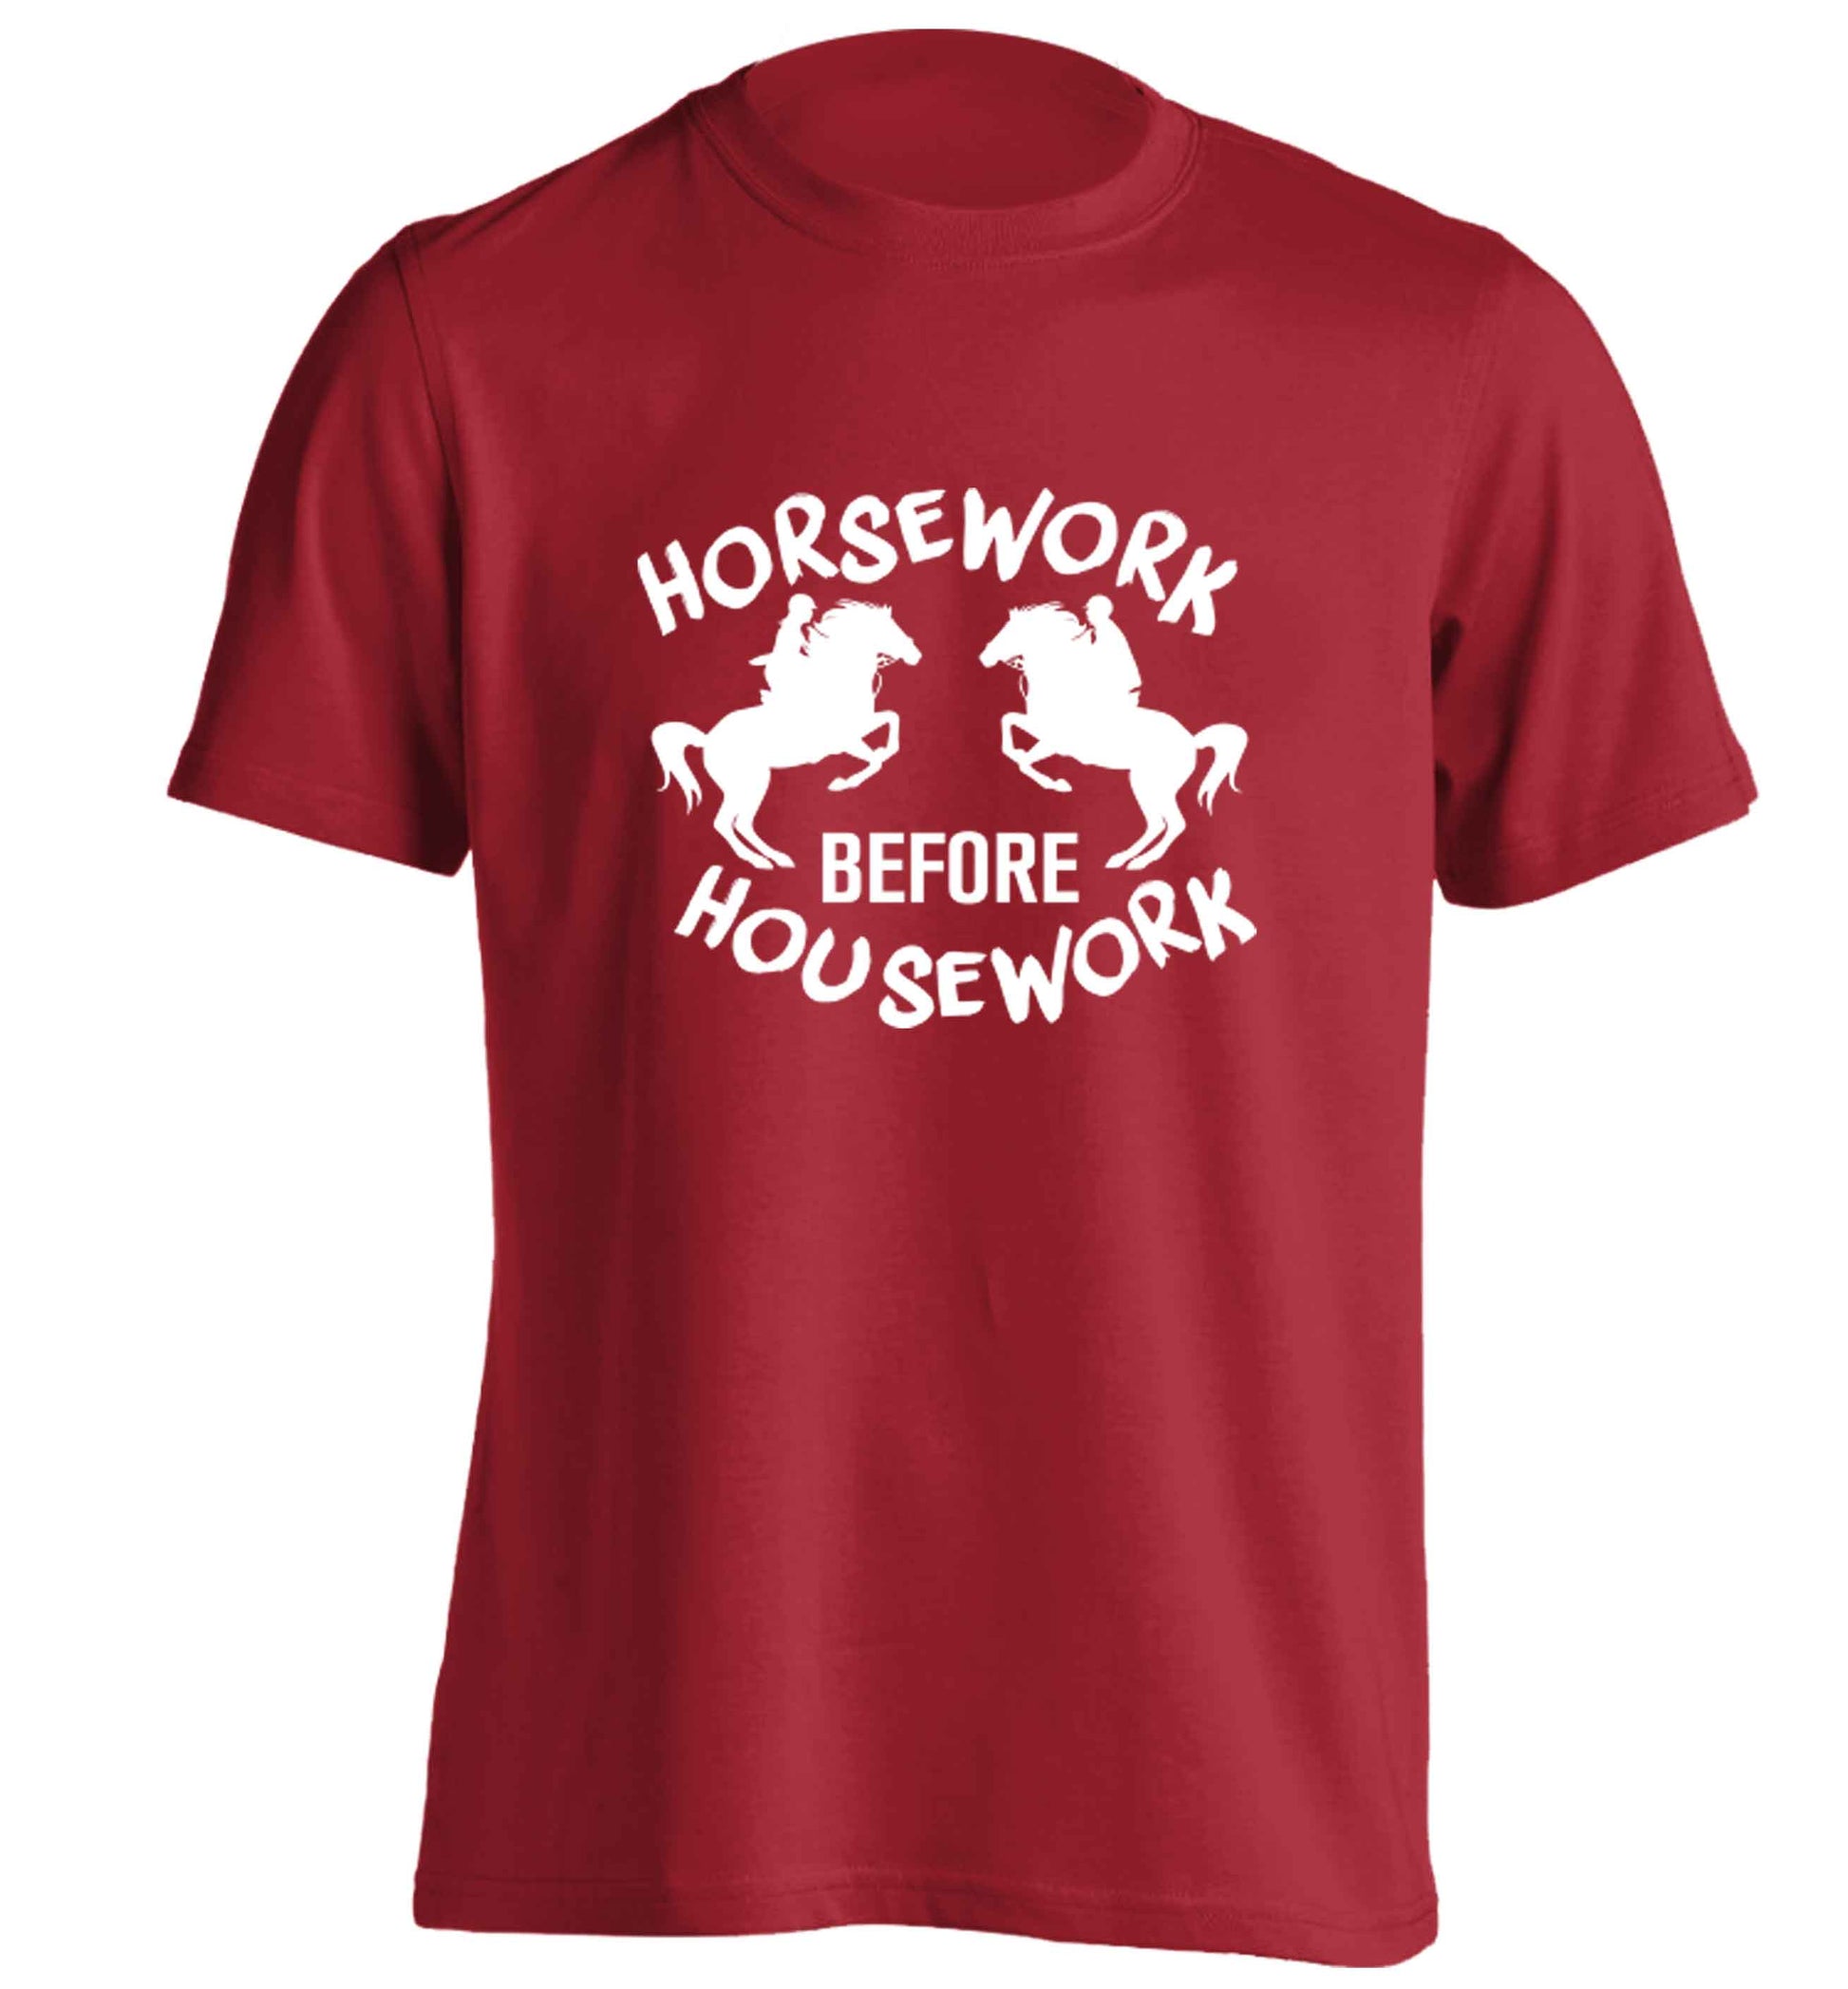 Horsework before housework adults unisex red Tshirt 2XL